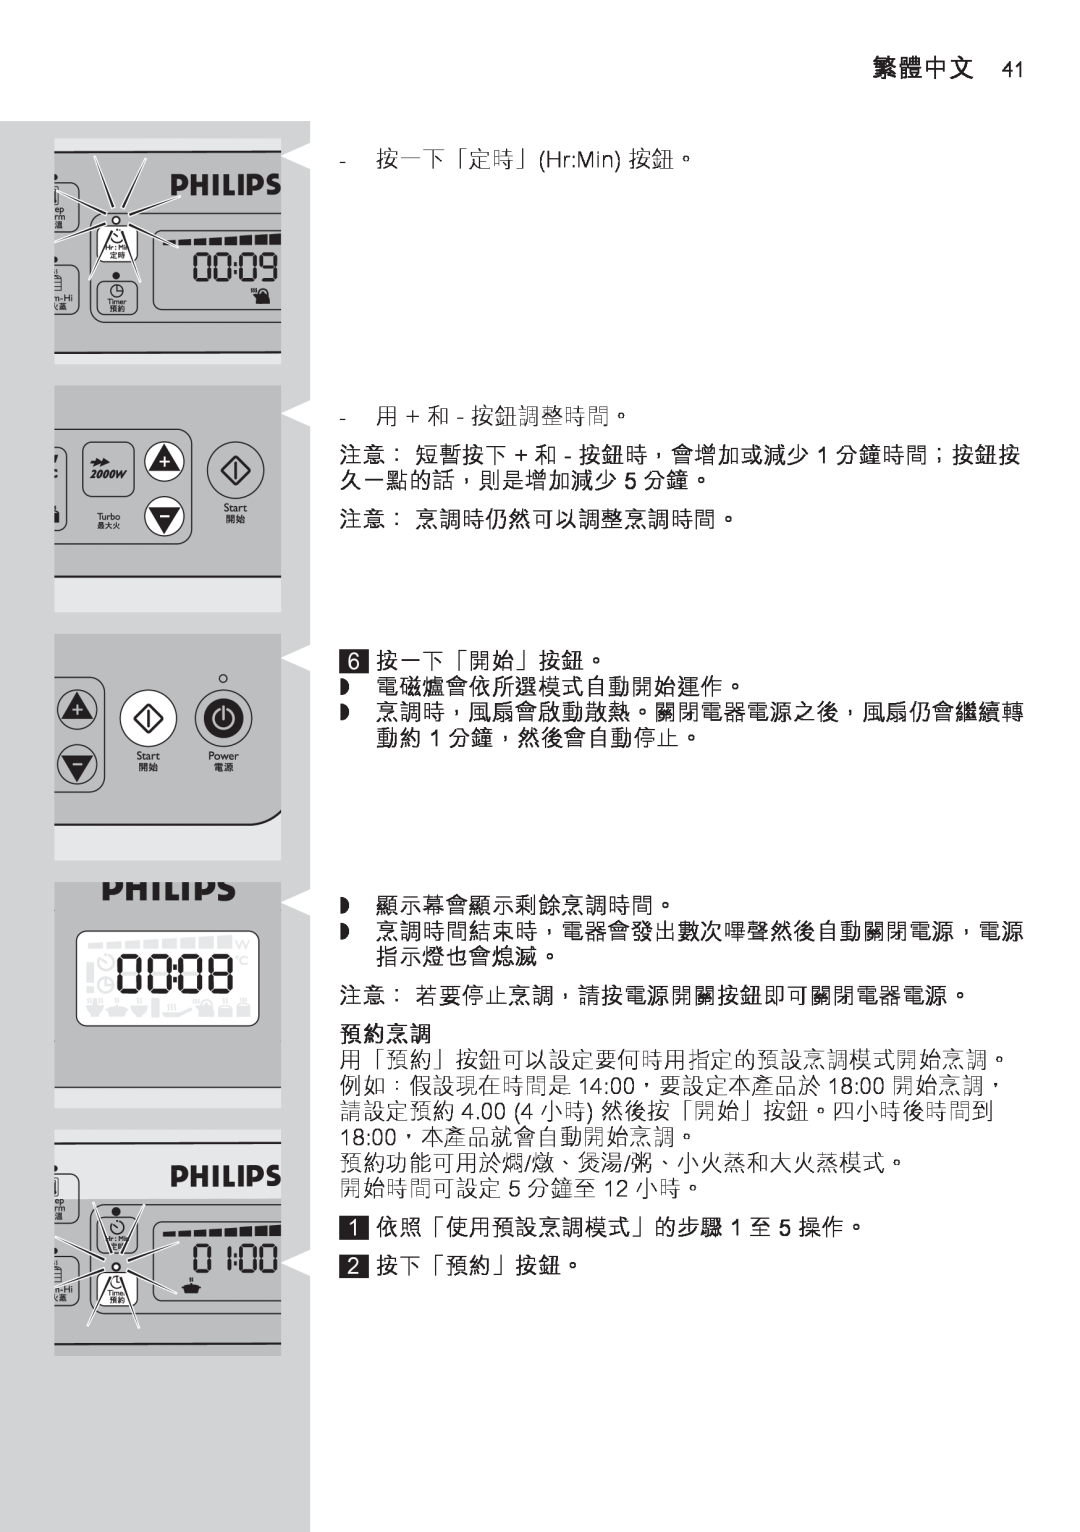 Philips HD4918 manual 繁體中文, 預約烹調 